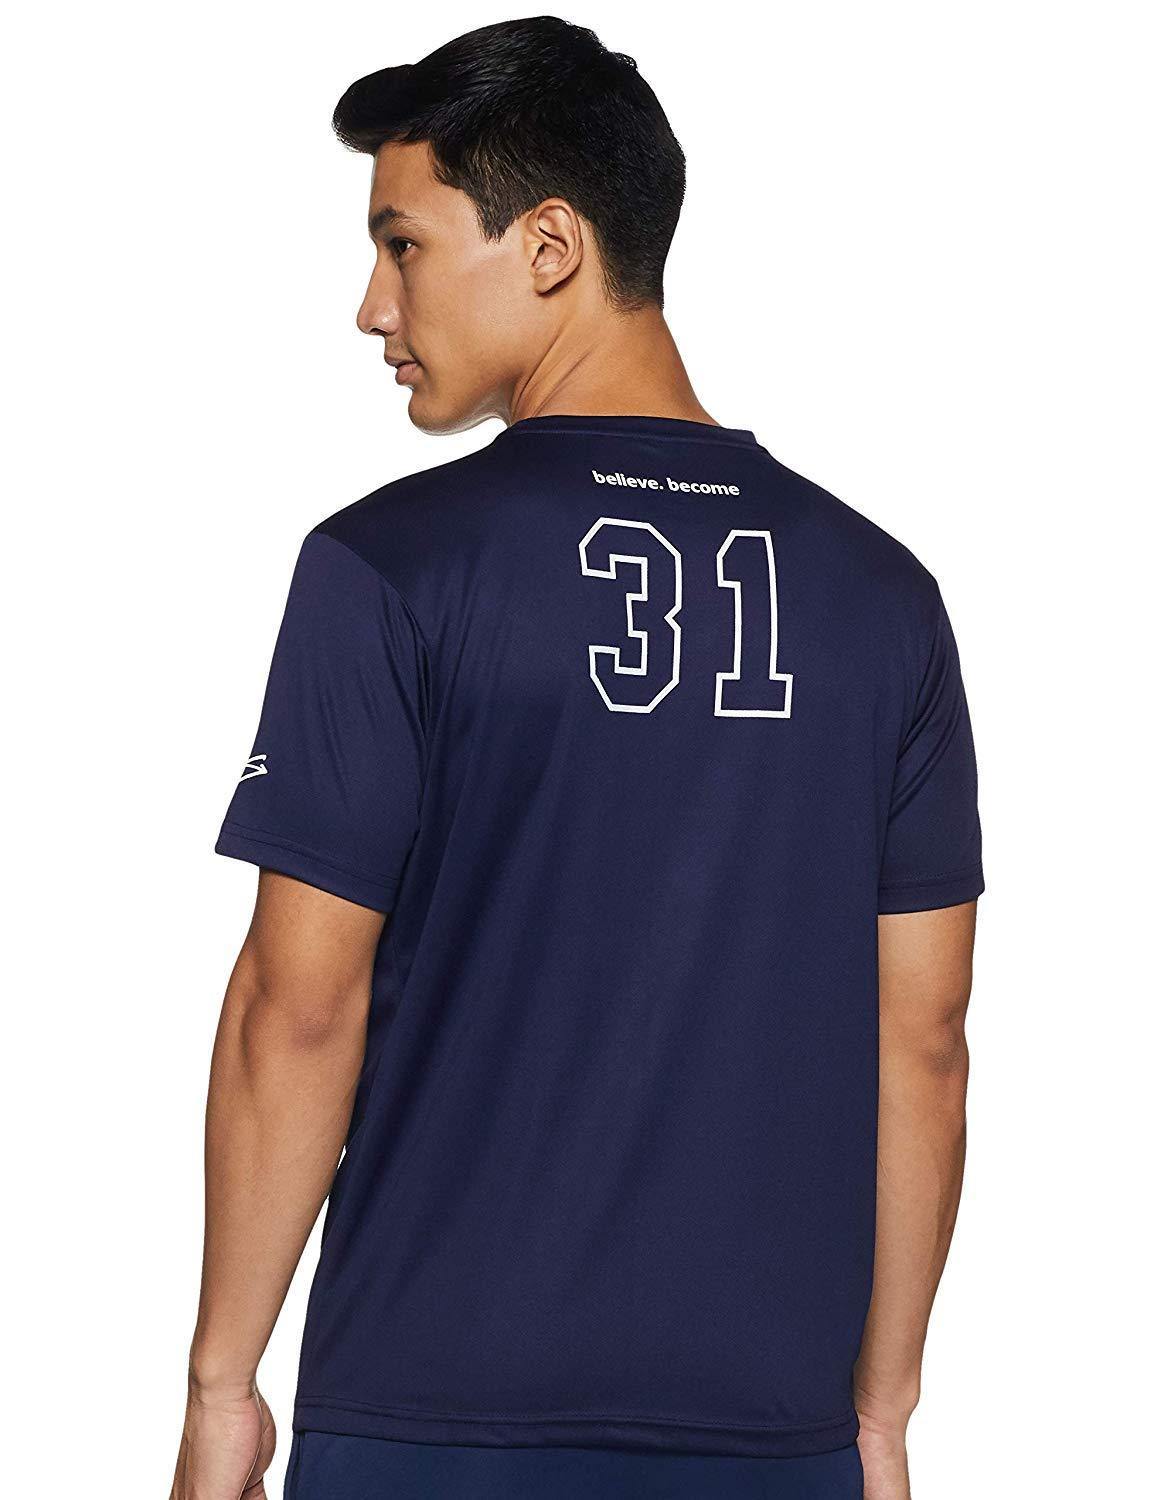 SG RTS2209 Polyester Round Neck Sports T-Shirt - Navy - Best Price online Prokicksports.com